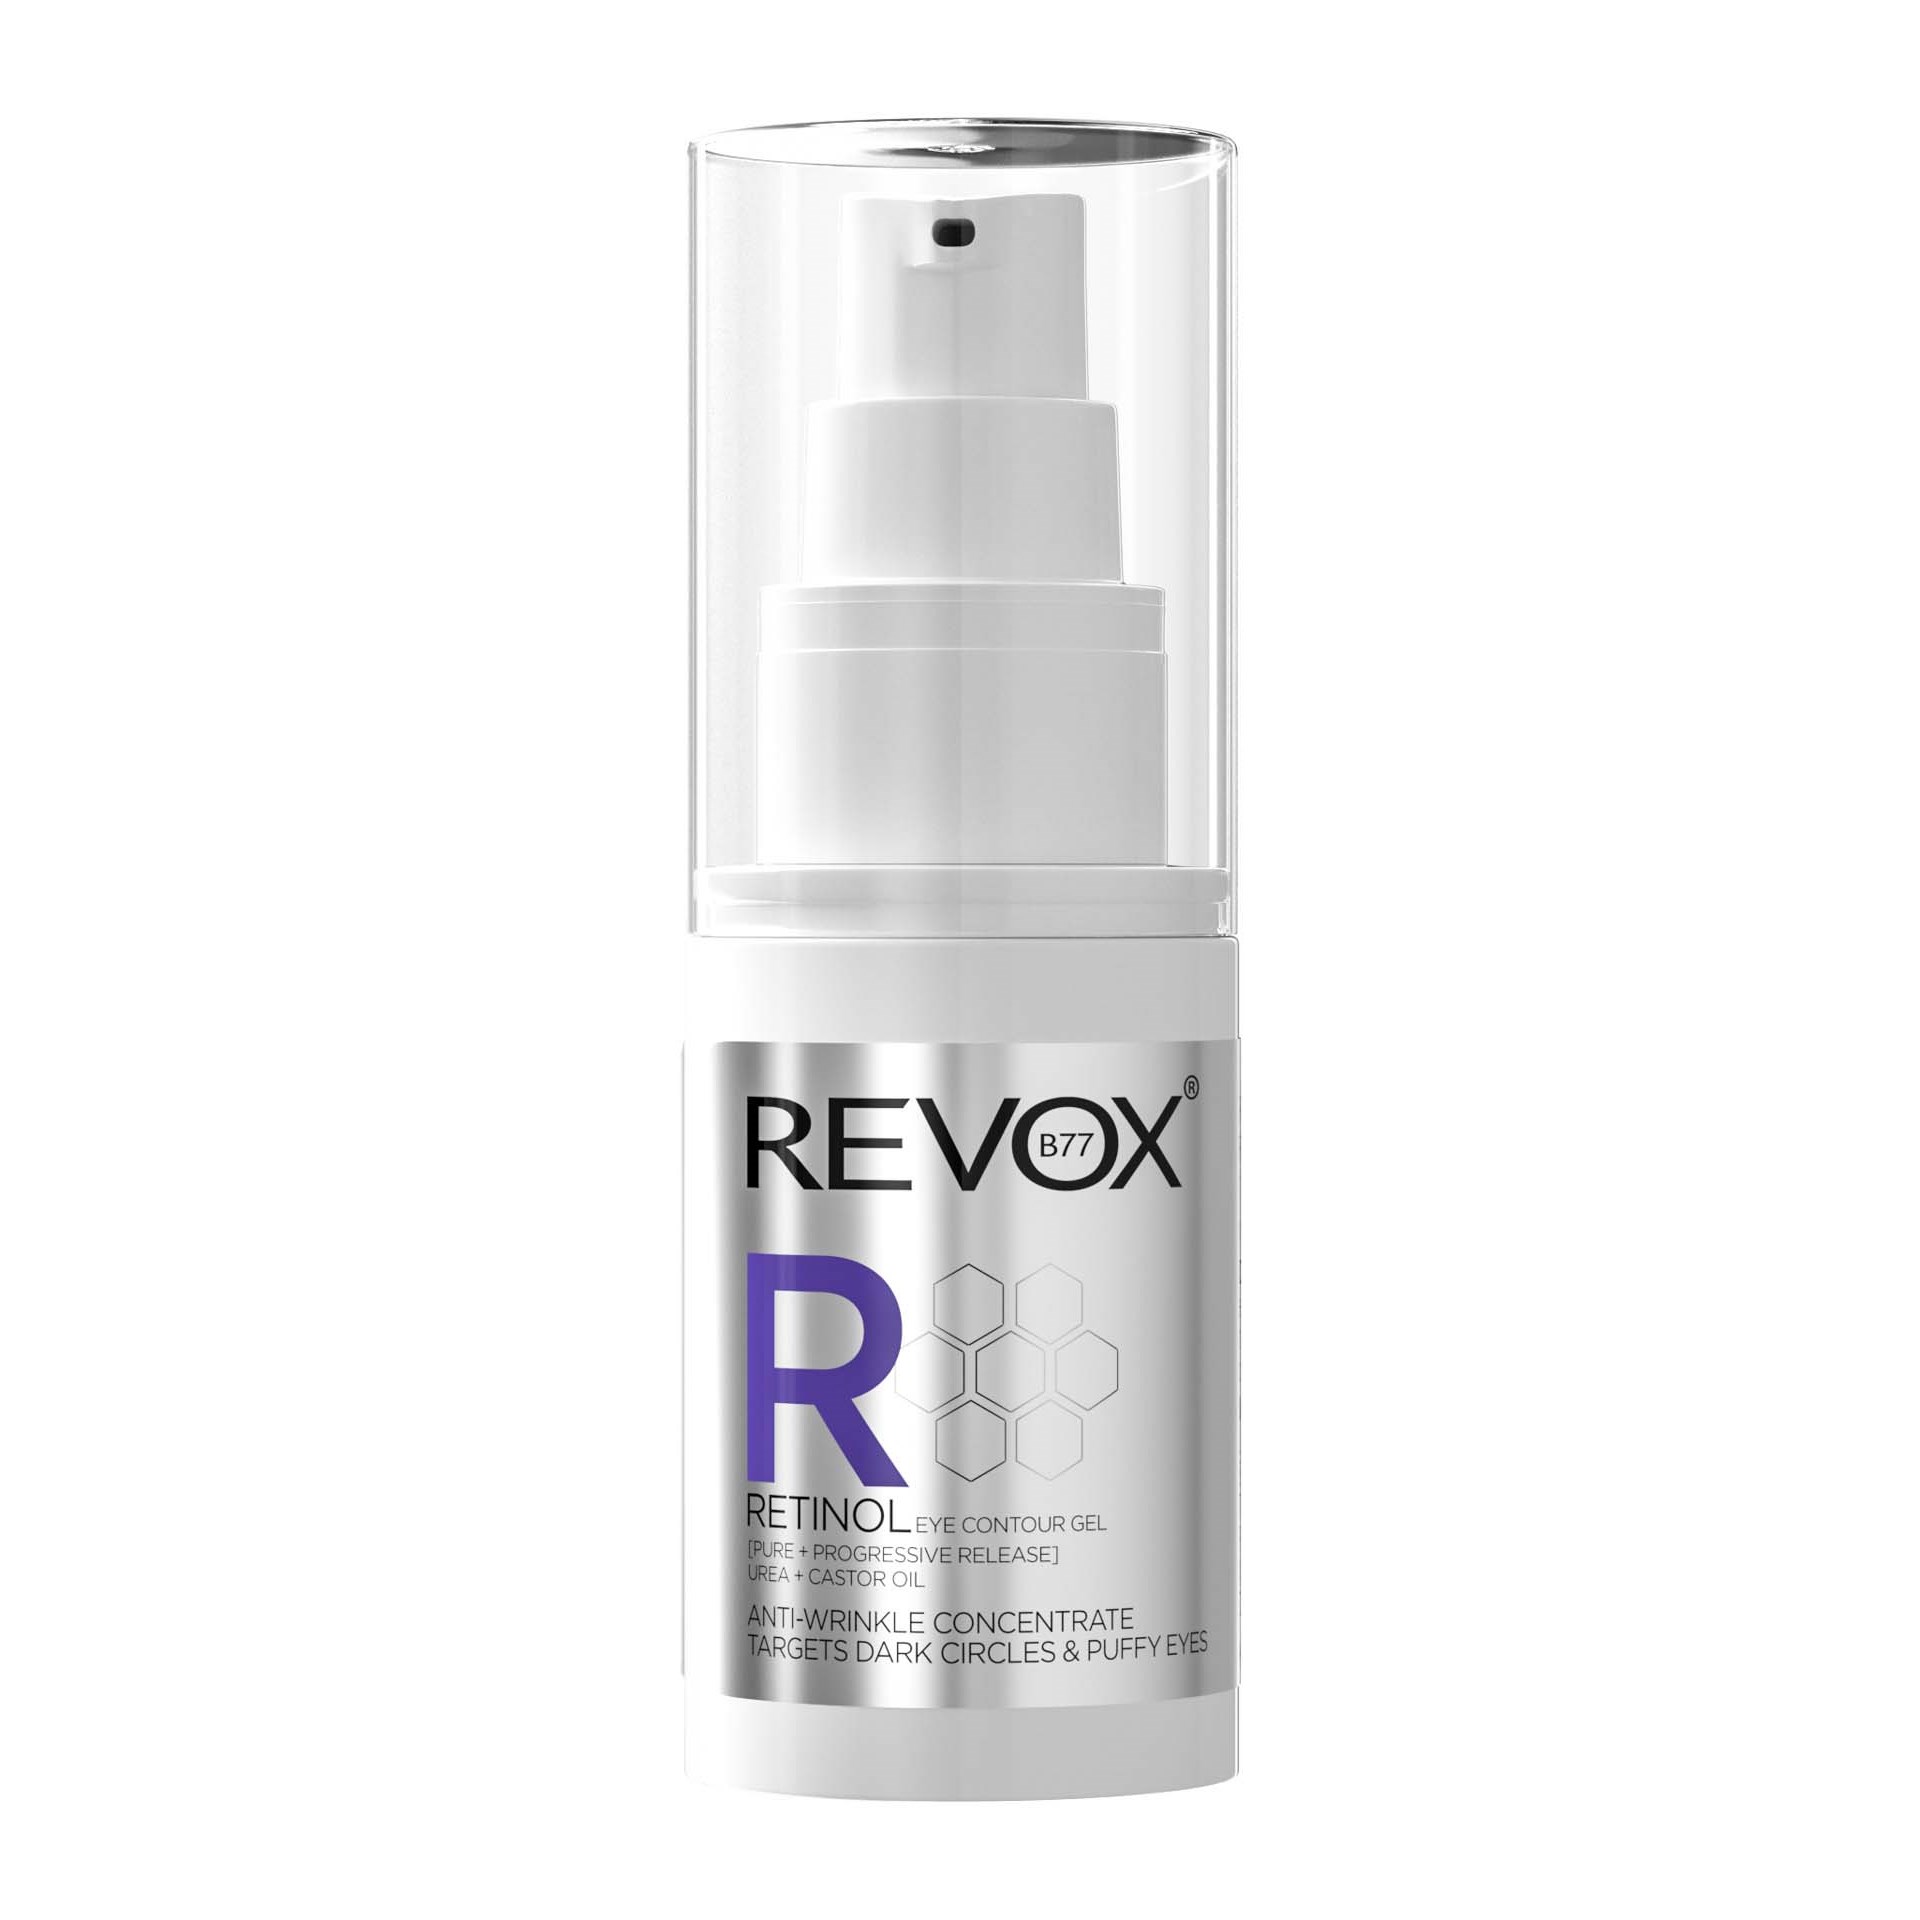 Revox JUST REVOX B77 Retinol Eye Gel Anti-Wrinkle Concentrate 30 ml